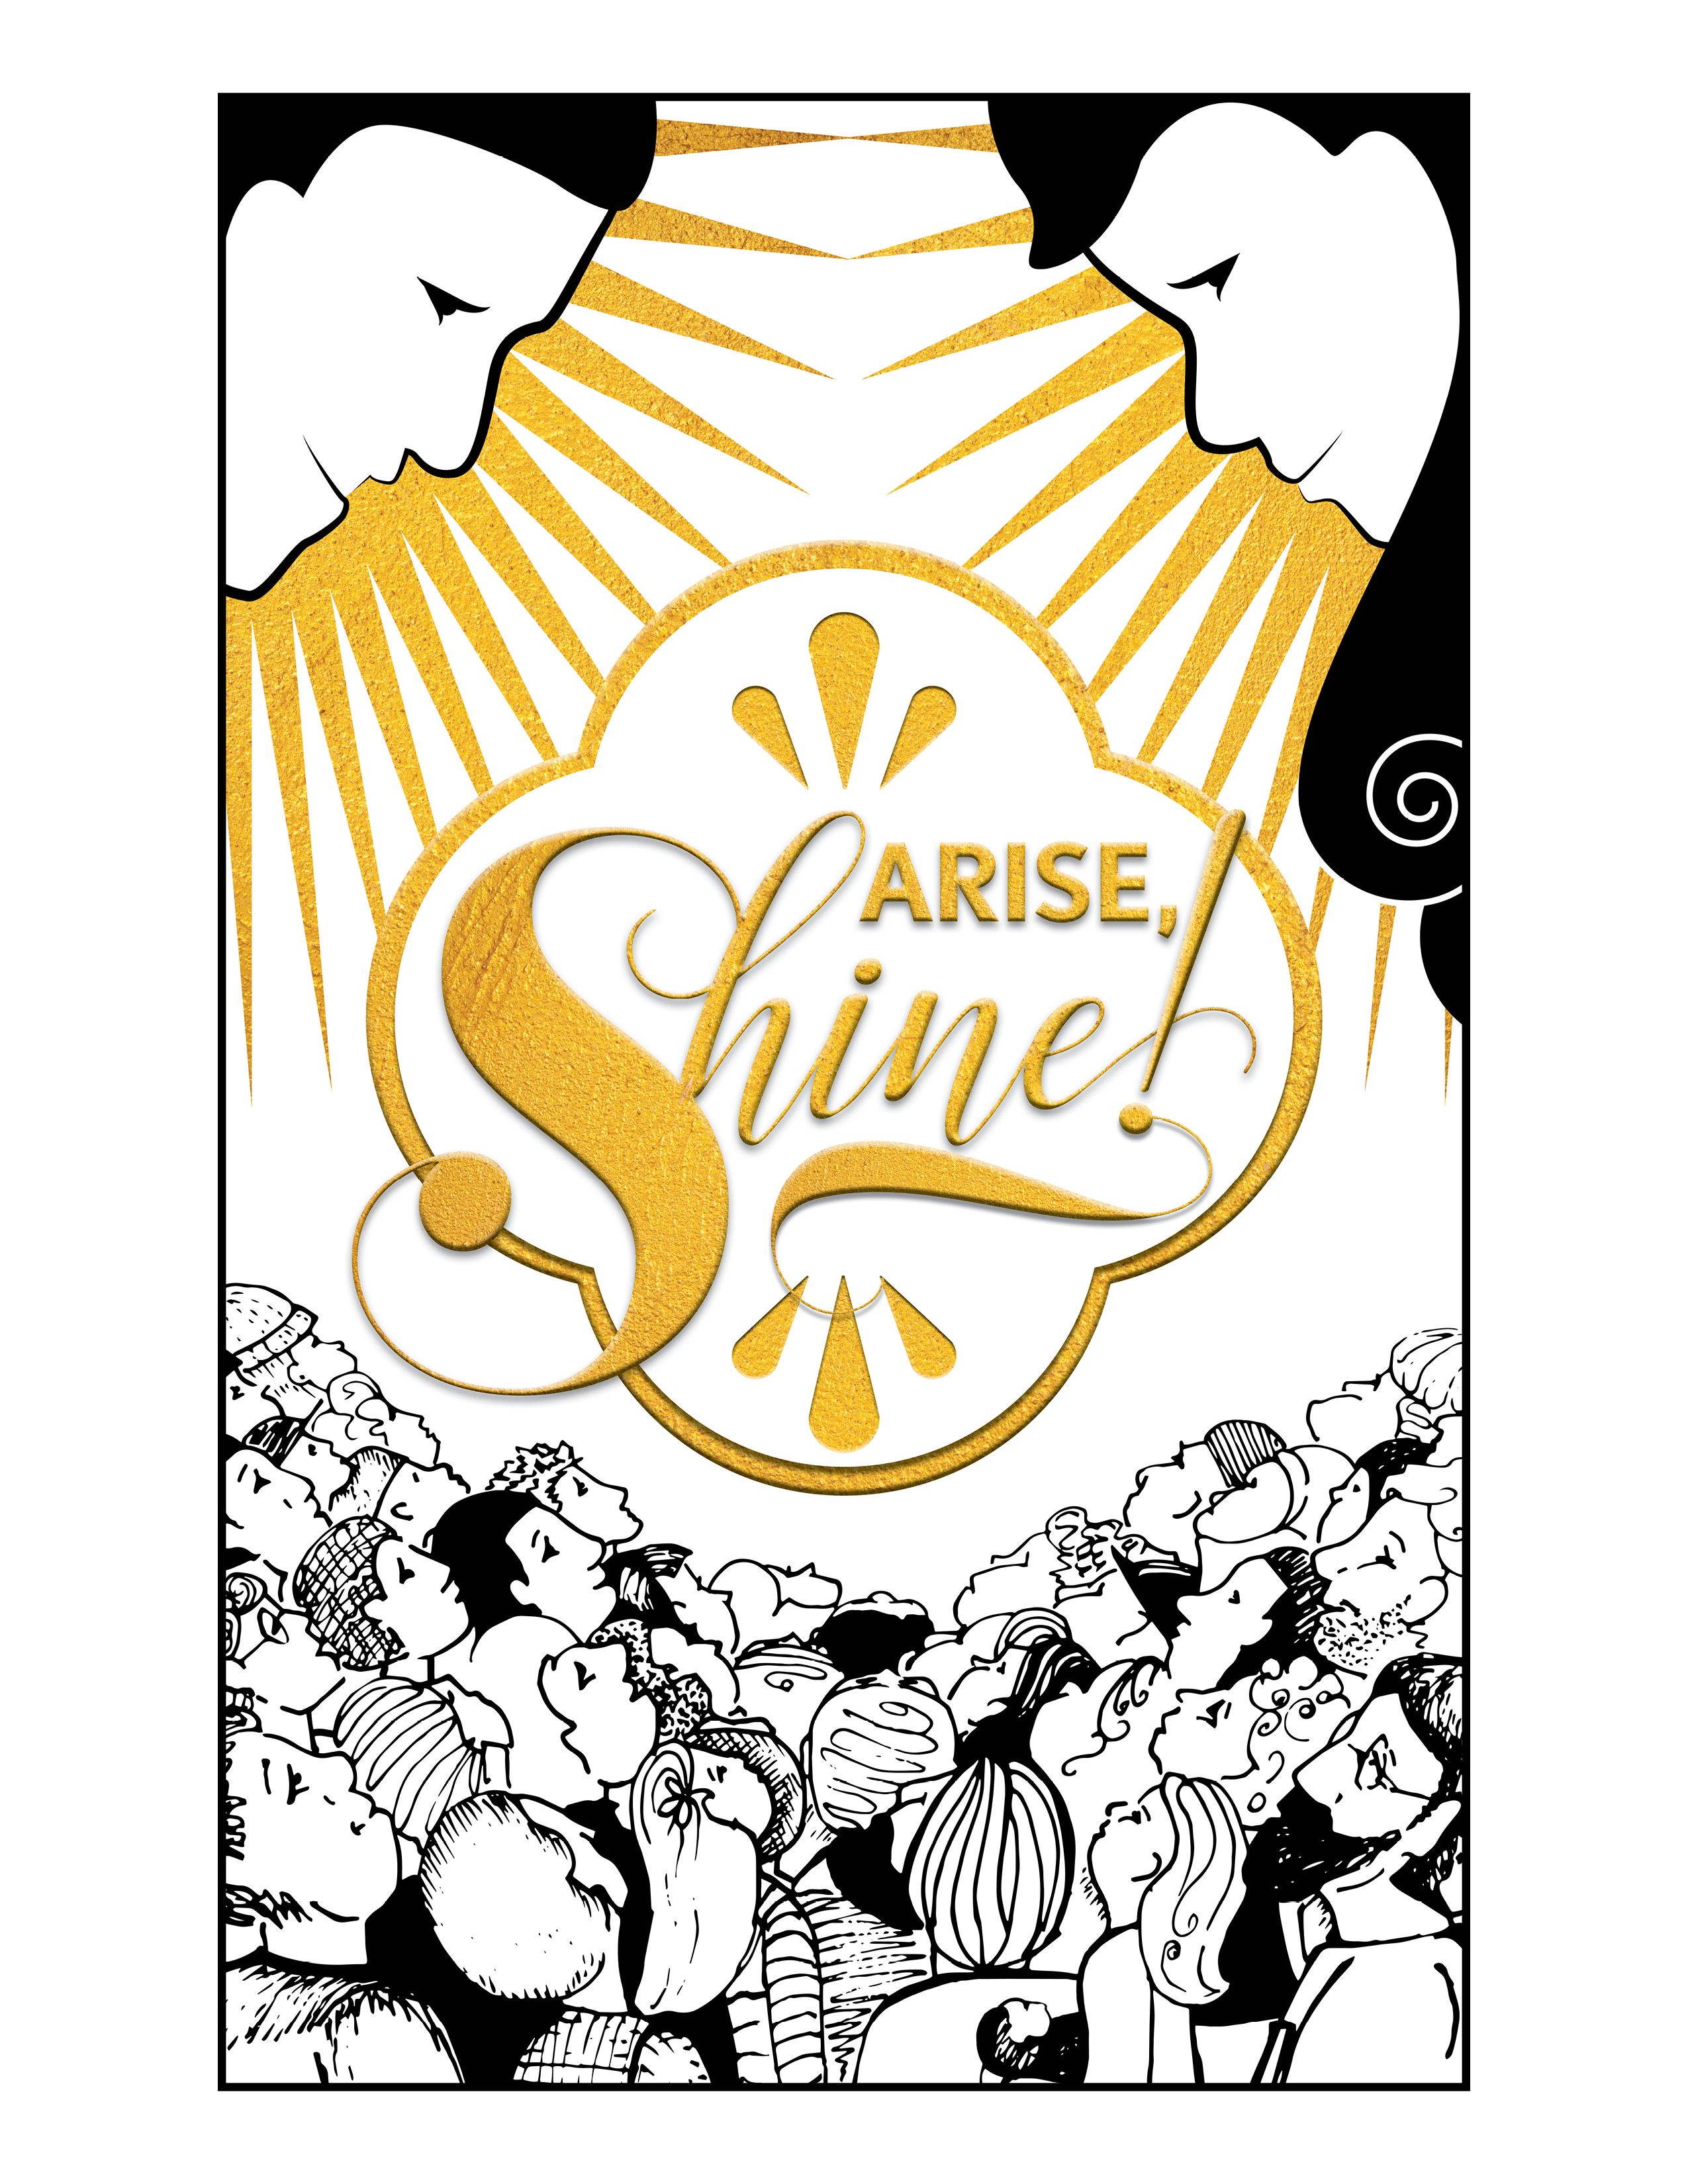 Arise, Shine! book cover design